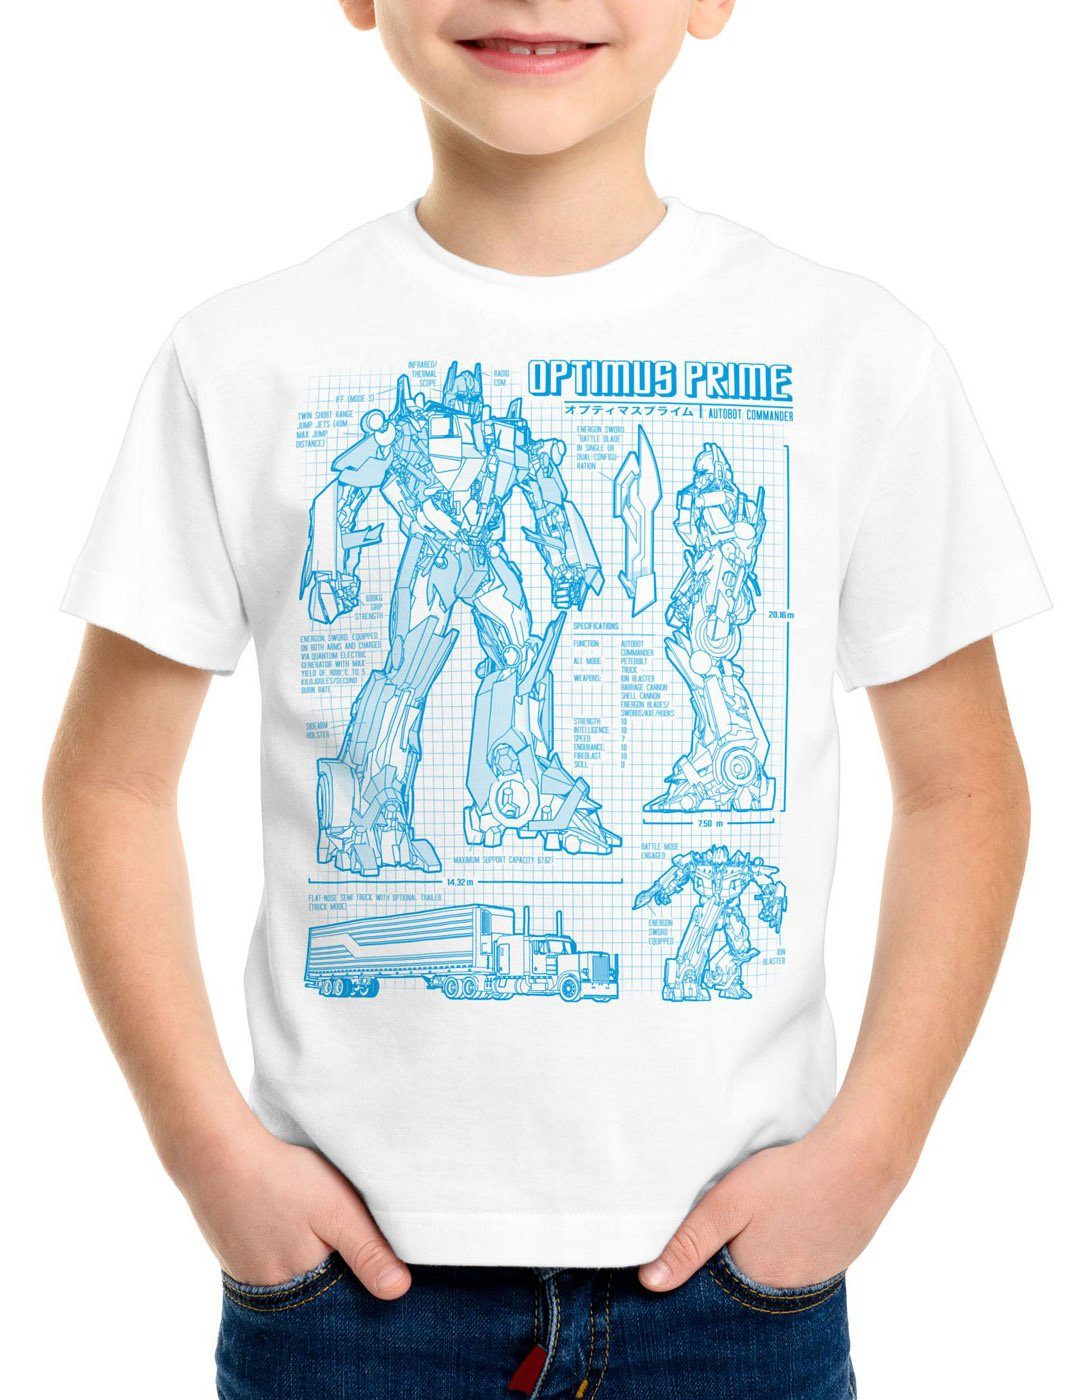 style3 Print-Shirt Kinder T-Shirt Optimus Prime blaupause autobot weiß